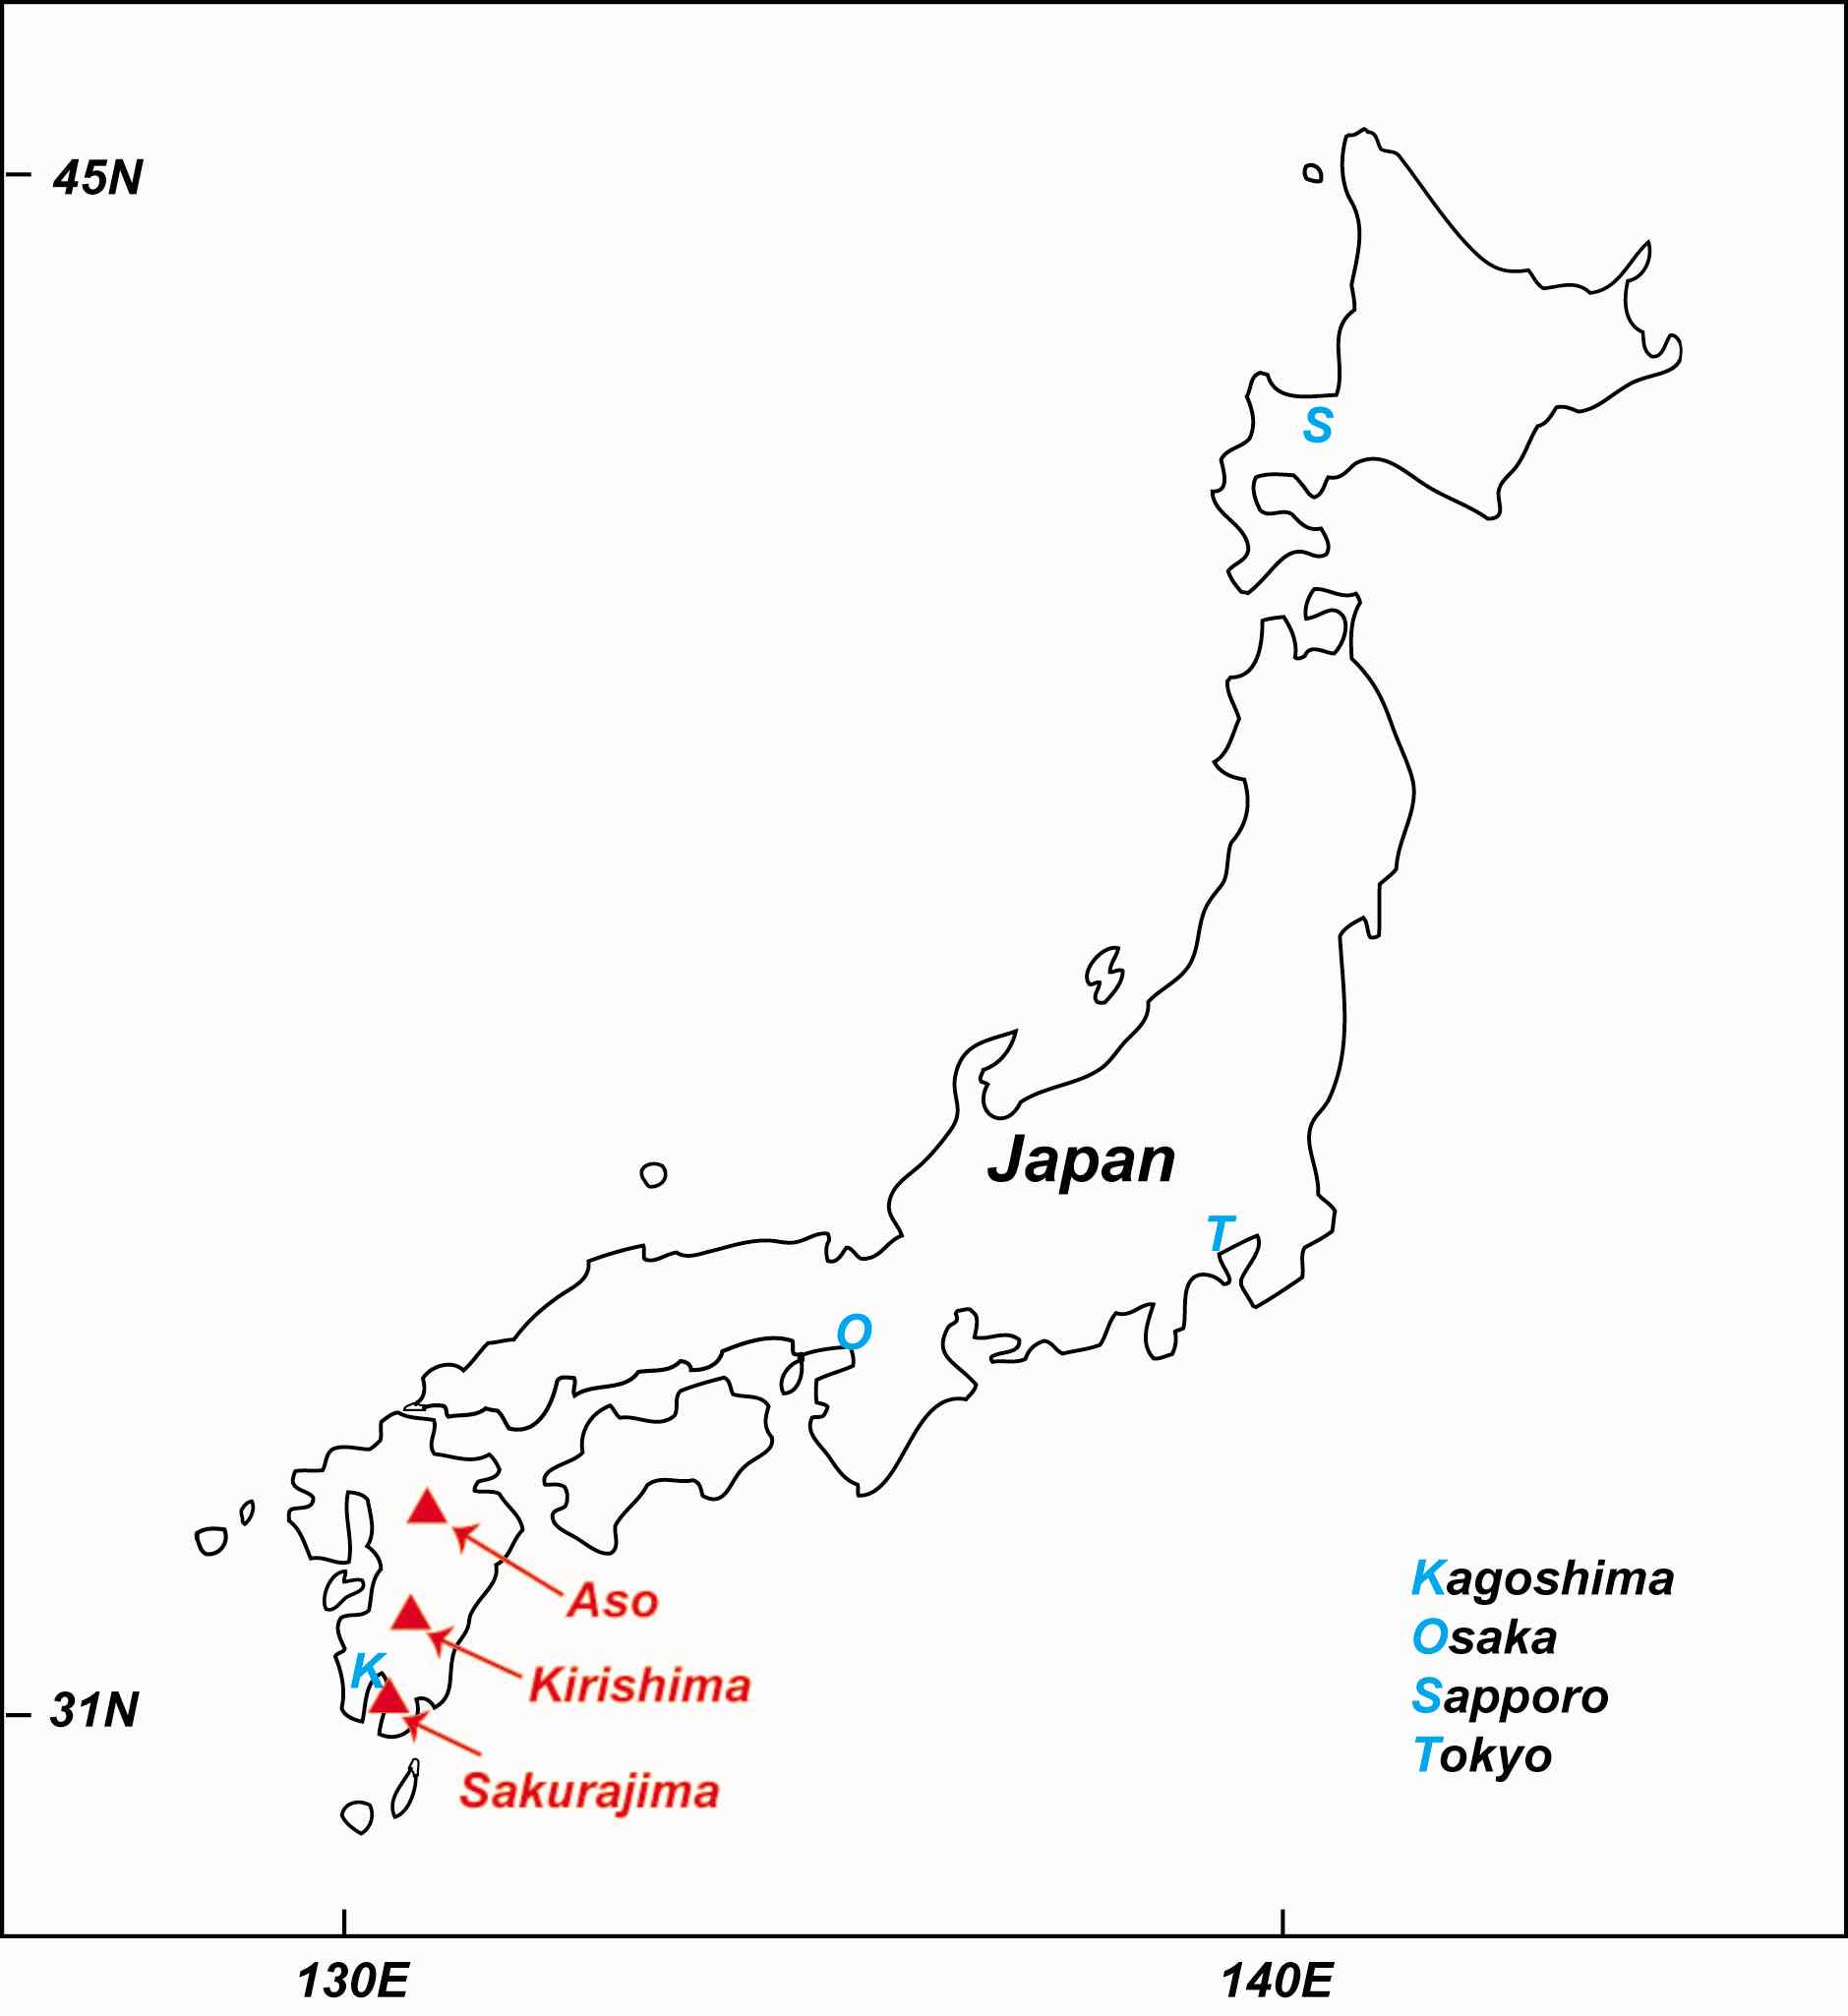 Figure 1. Sampling locations of active volcanoes in Japan